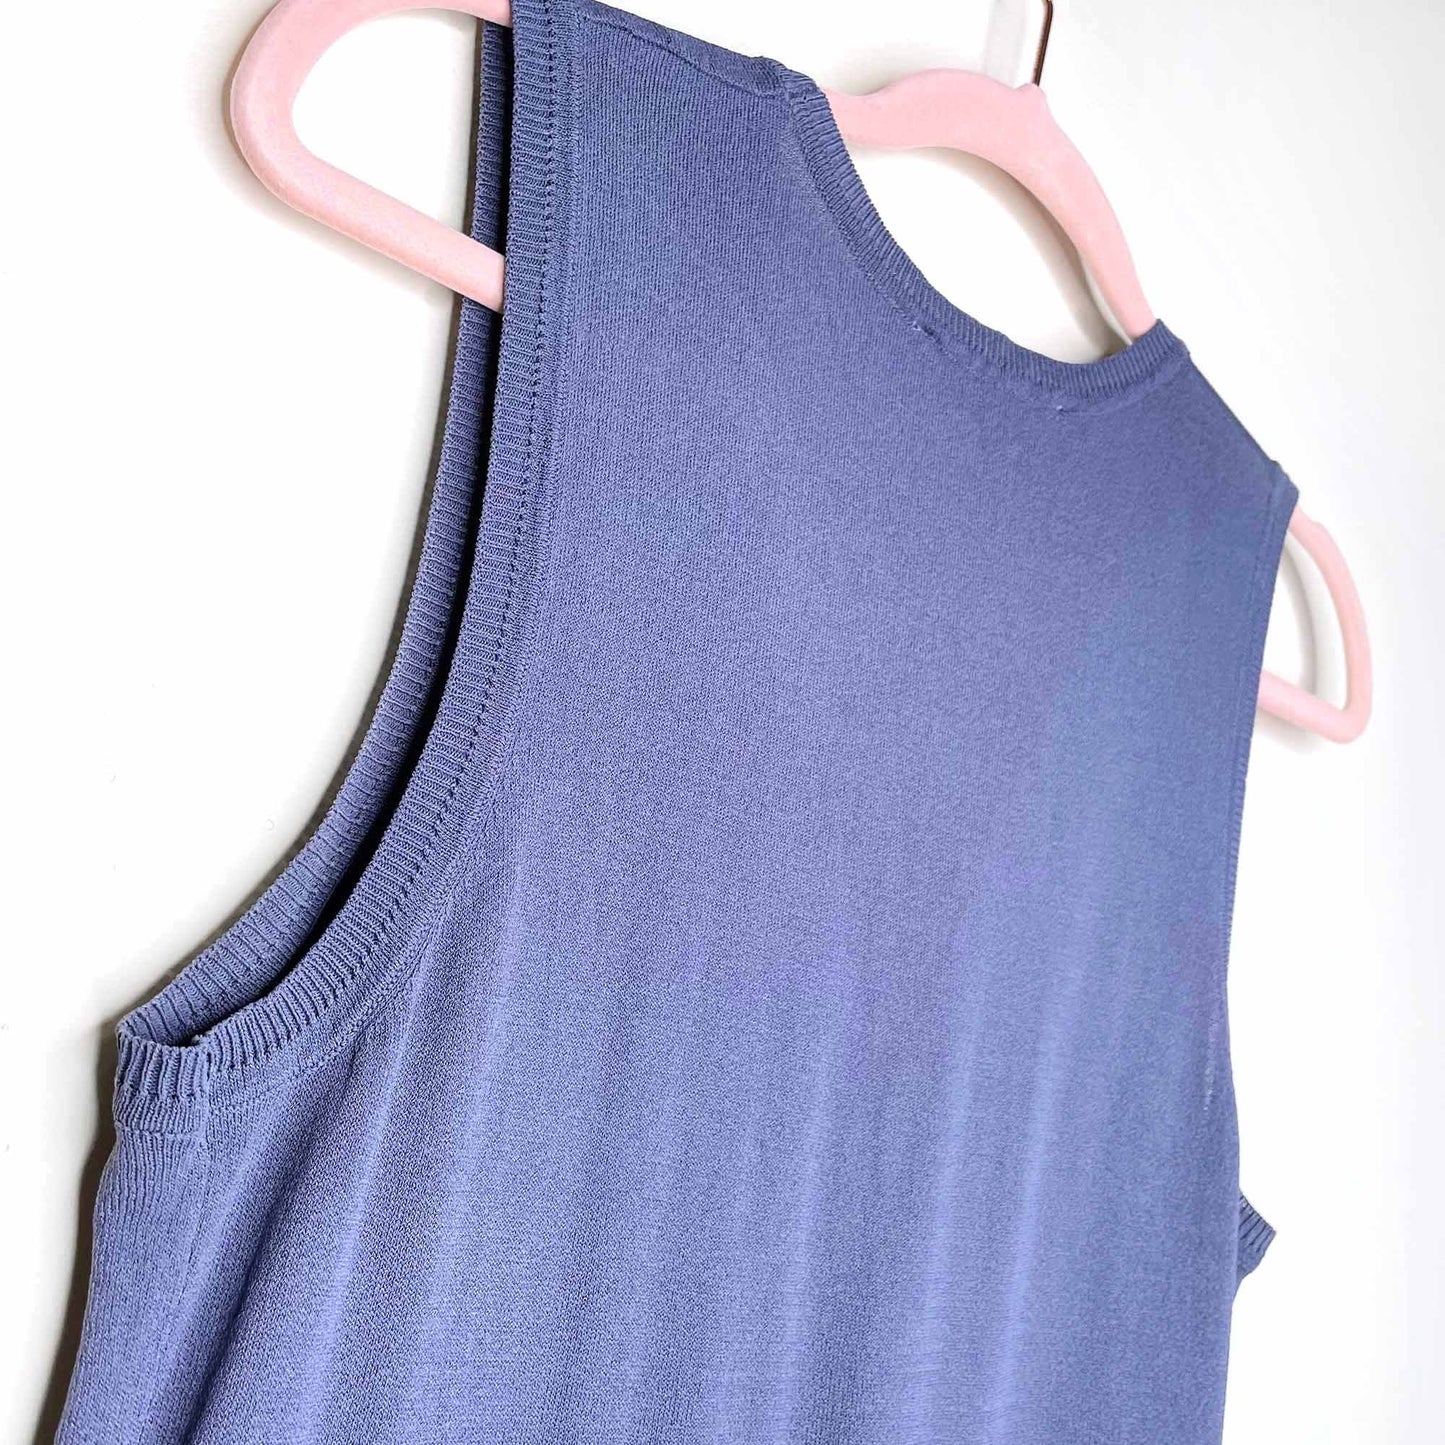 zara knit dusty blue sleeveless top - size large